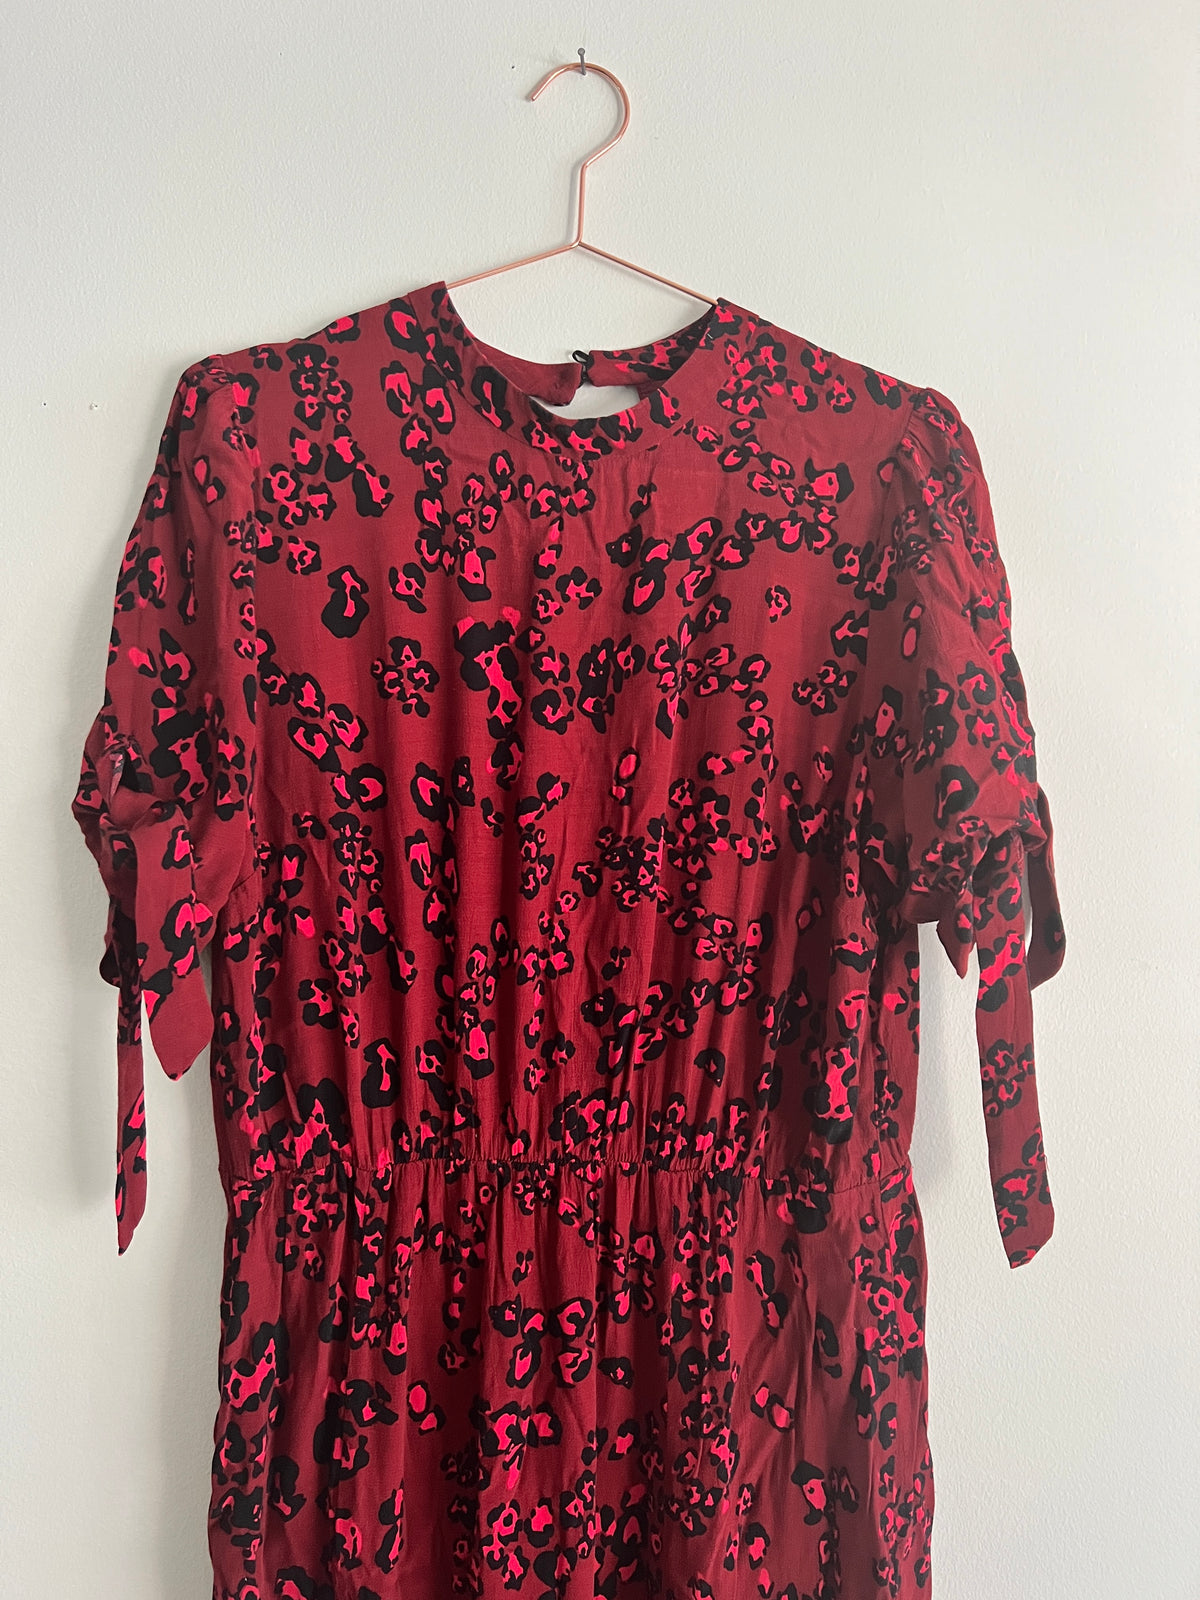 Boden Leopard Dress in Red Preloved